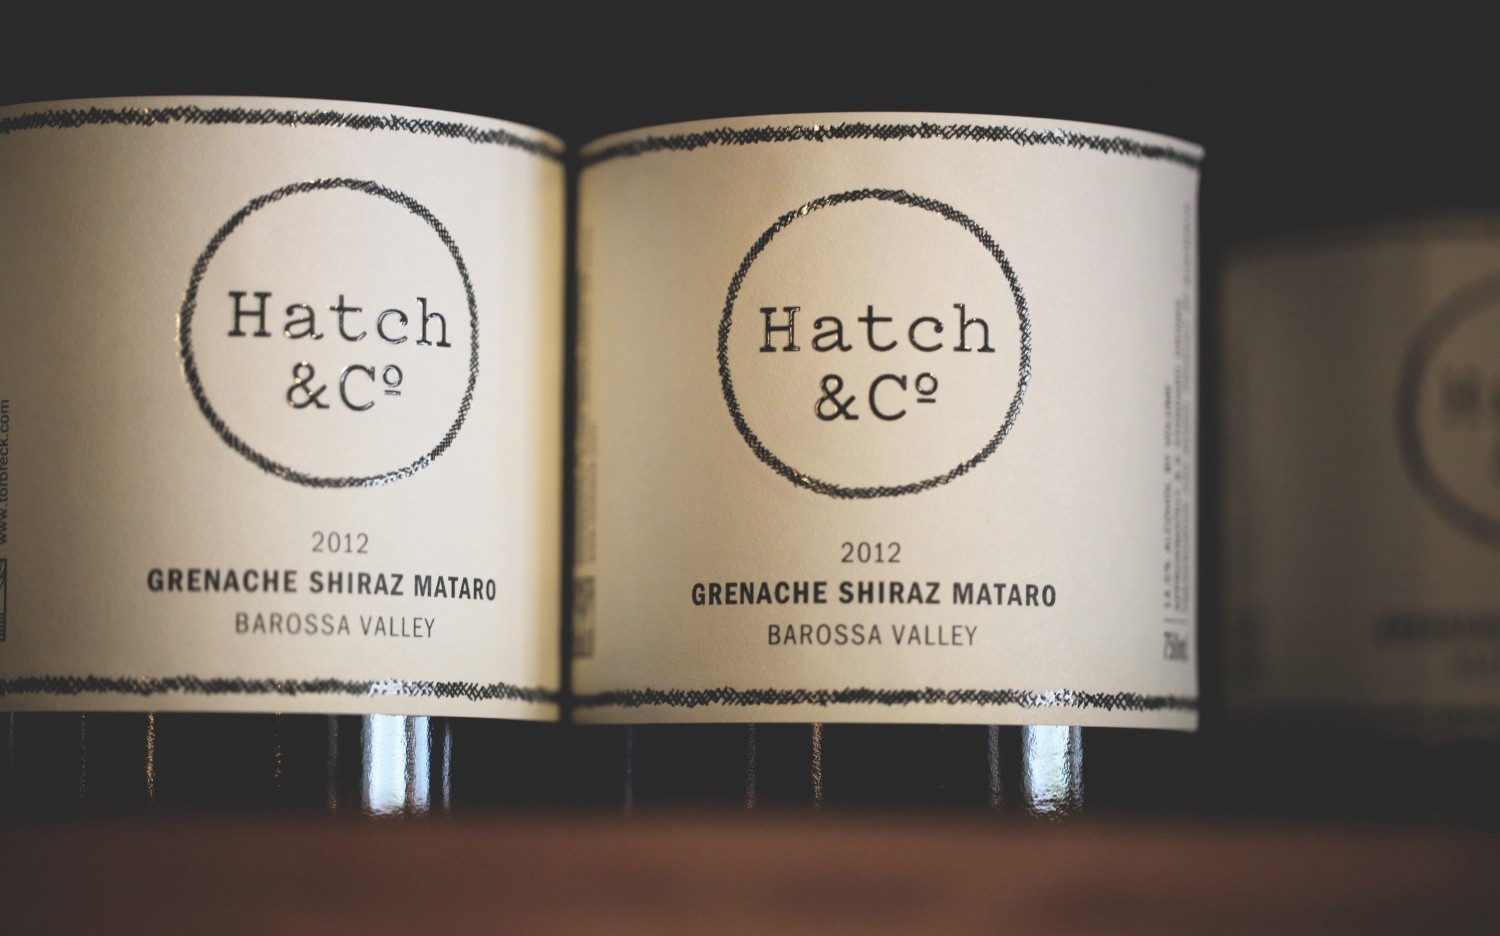 Hatch & Co.